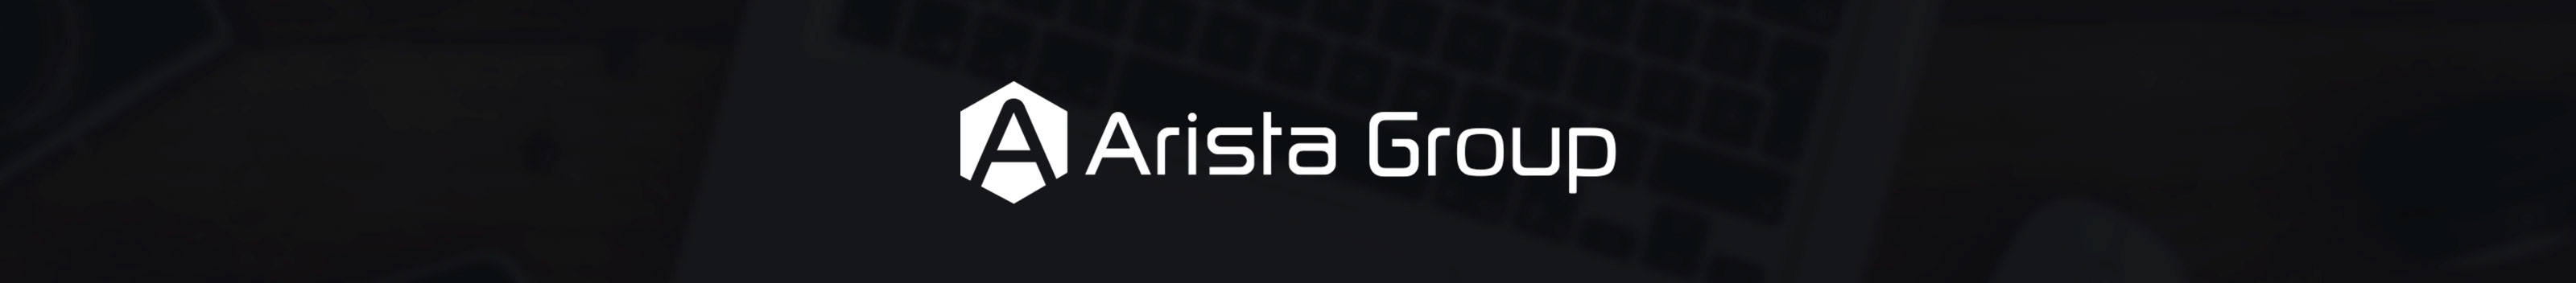 Arista Studio's profile banner